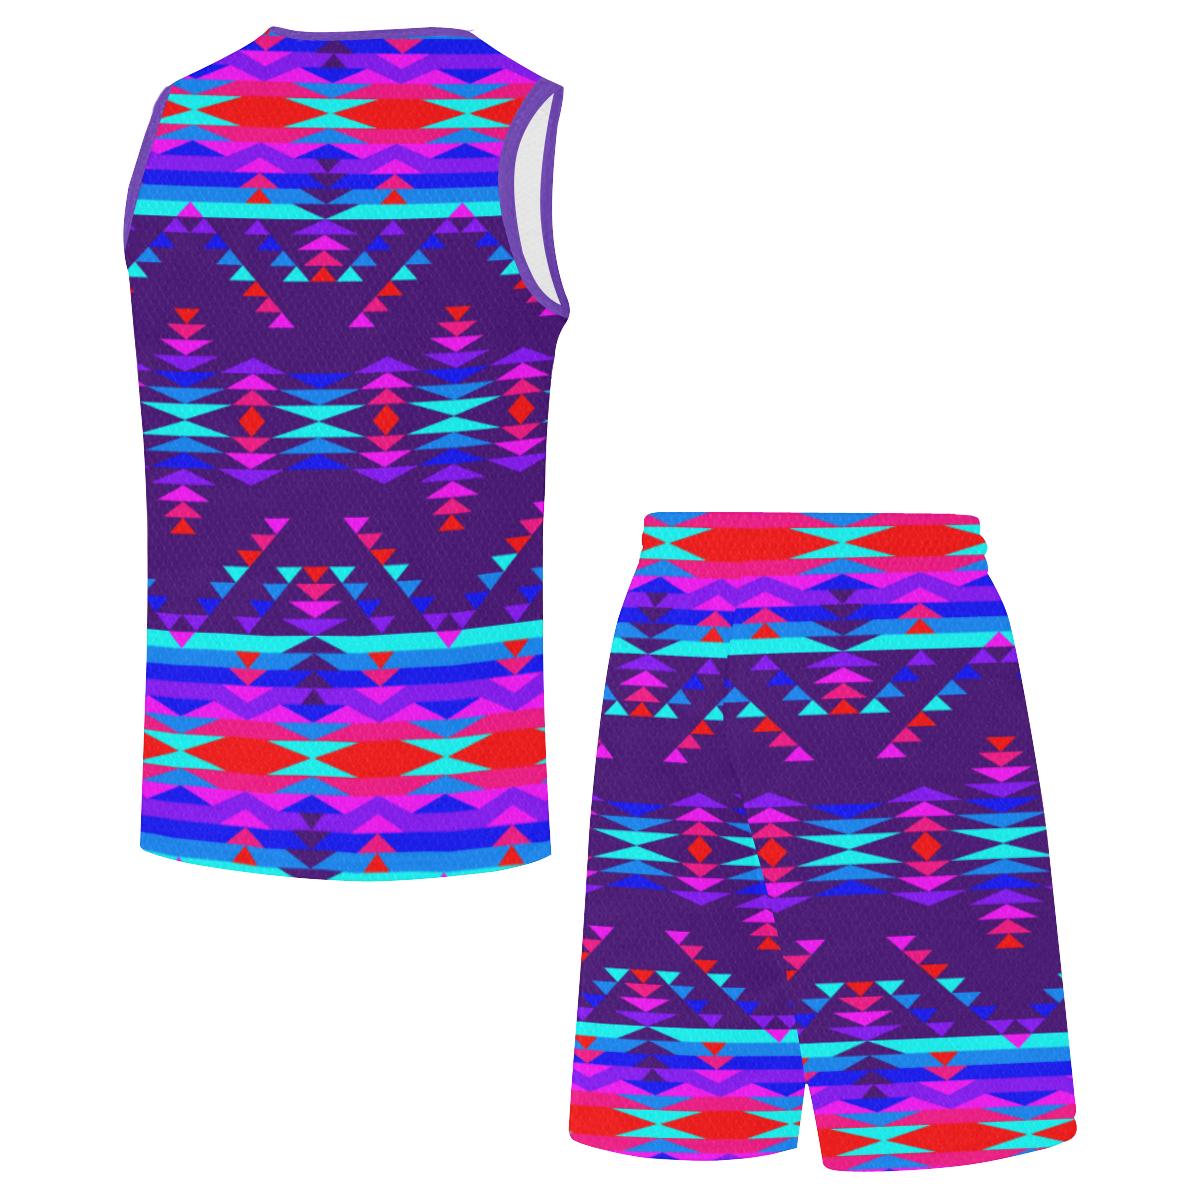 Vision of Peace LG All Over Print Basketball Uniform Basketball Uniform e-joyer 